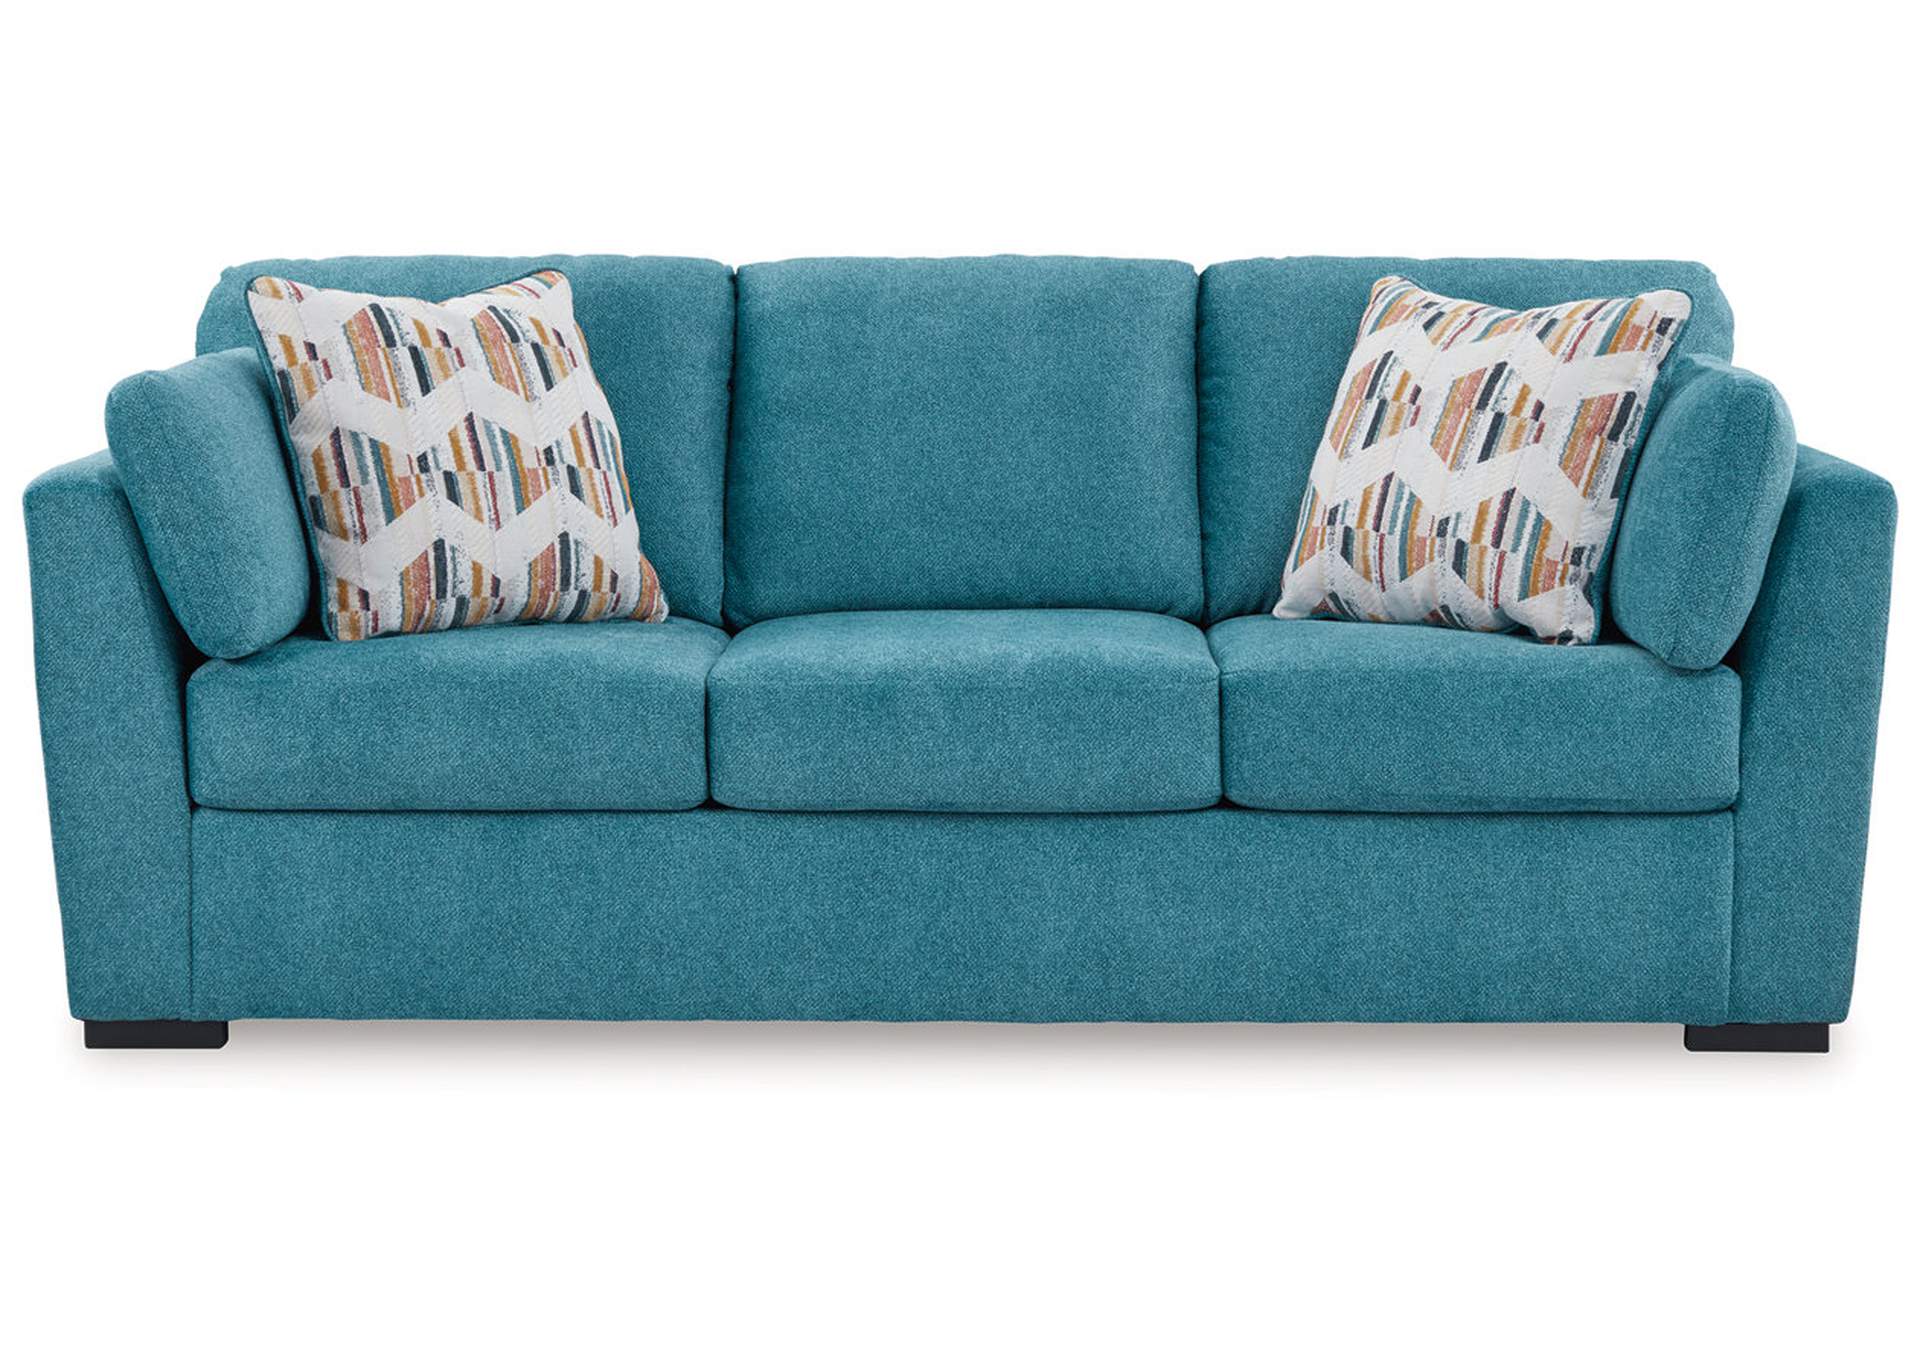 Keerwick Queen Sofa Sleeper,Signature Design By Ashley